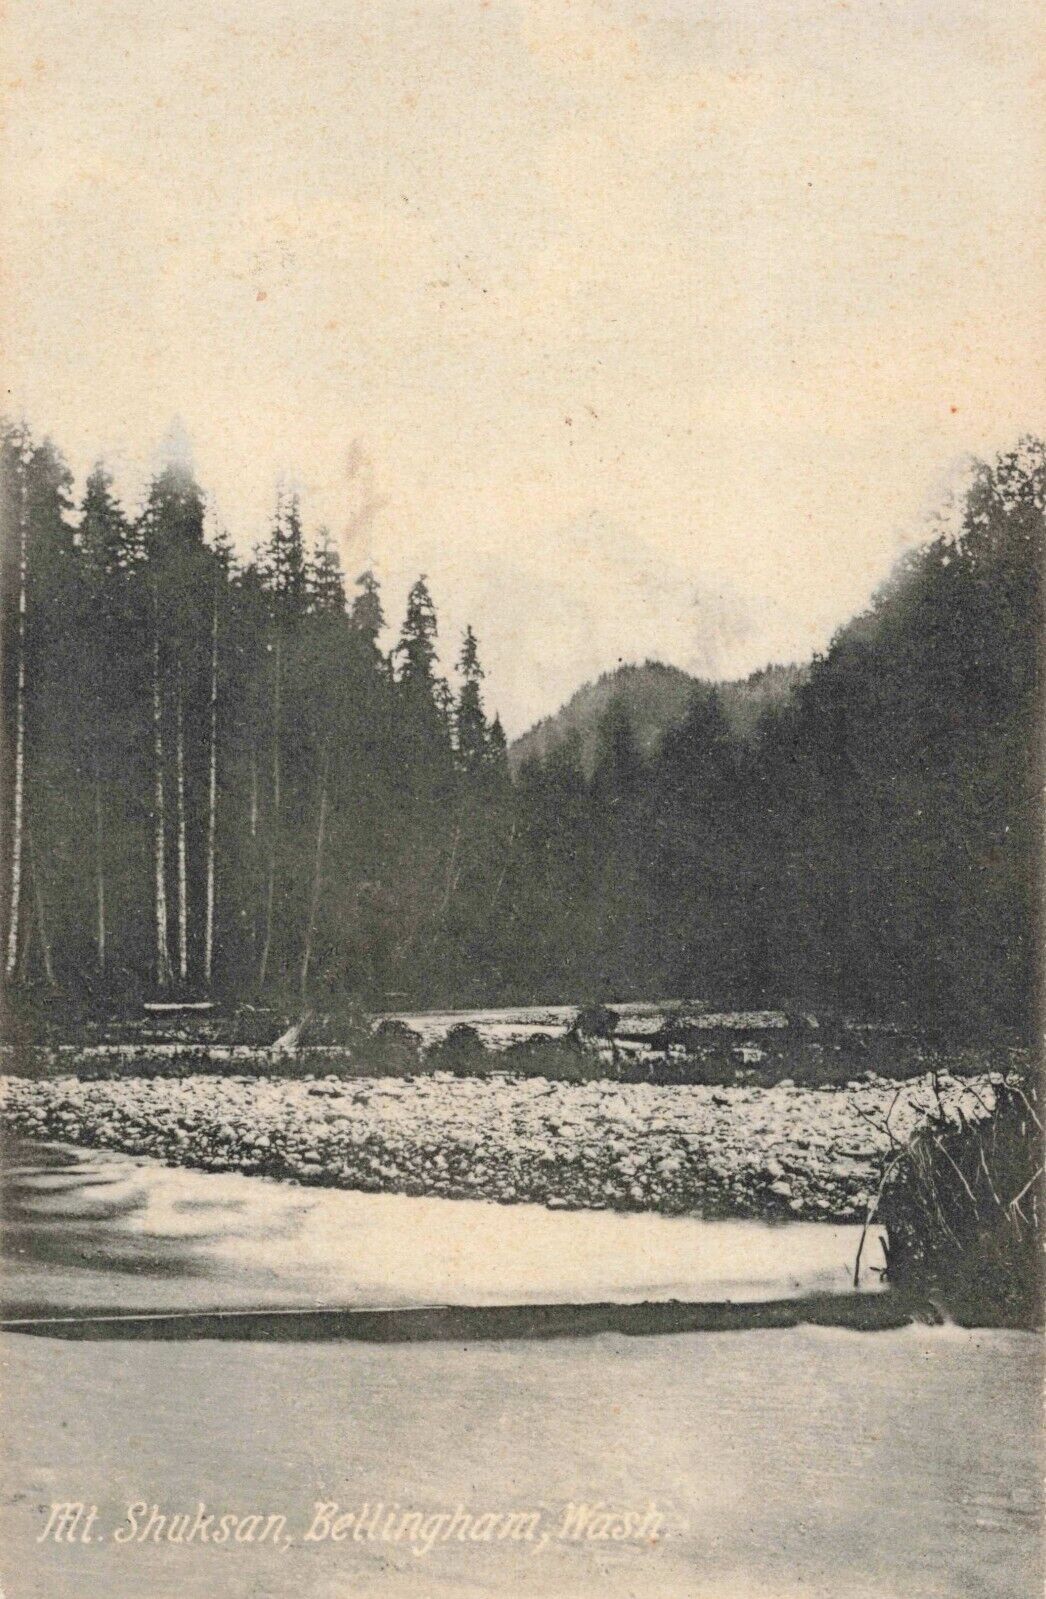 Mt. Shuksan Bellingham Washington WA c1910 Postcard